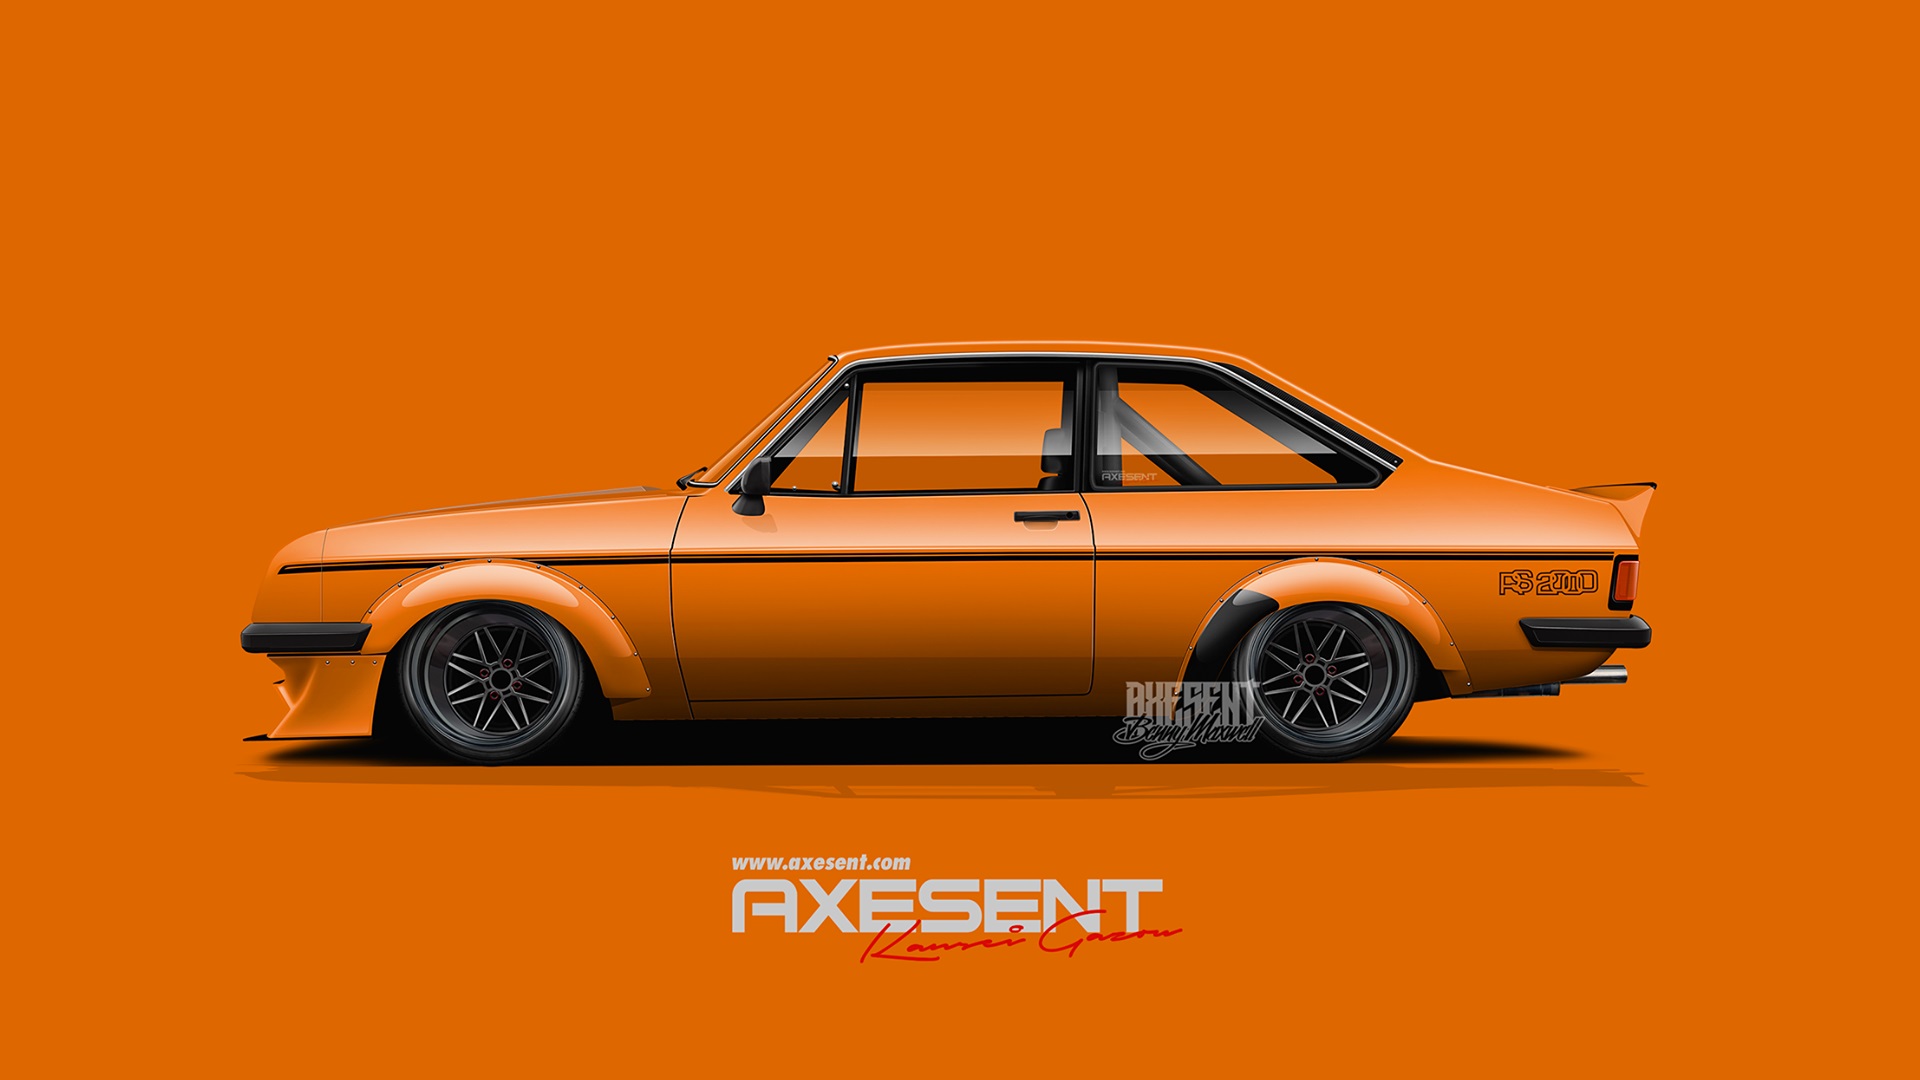 General 1920x1080 Axesent Creations CGI British cars Ford side view orange cars orange background orange